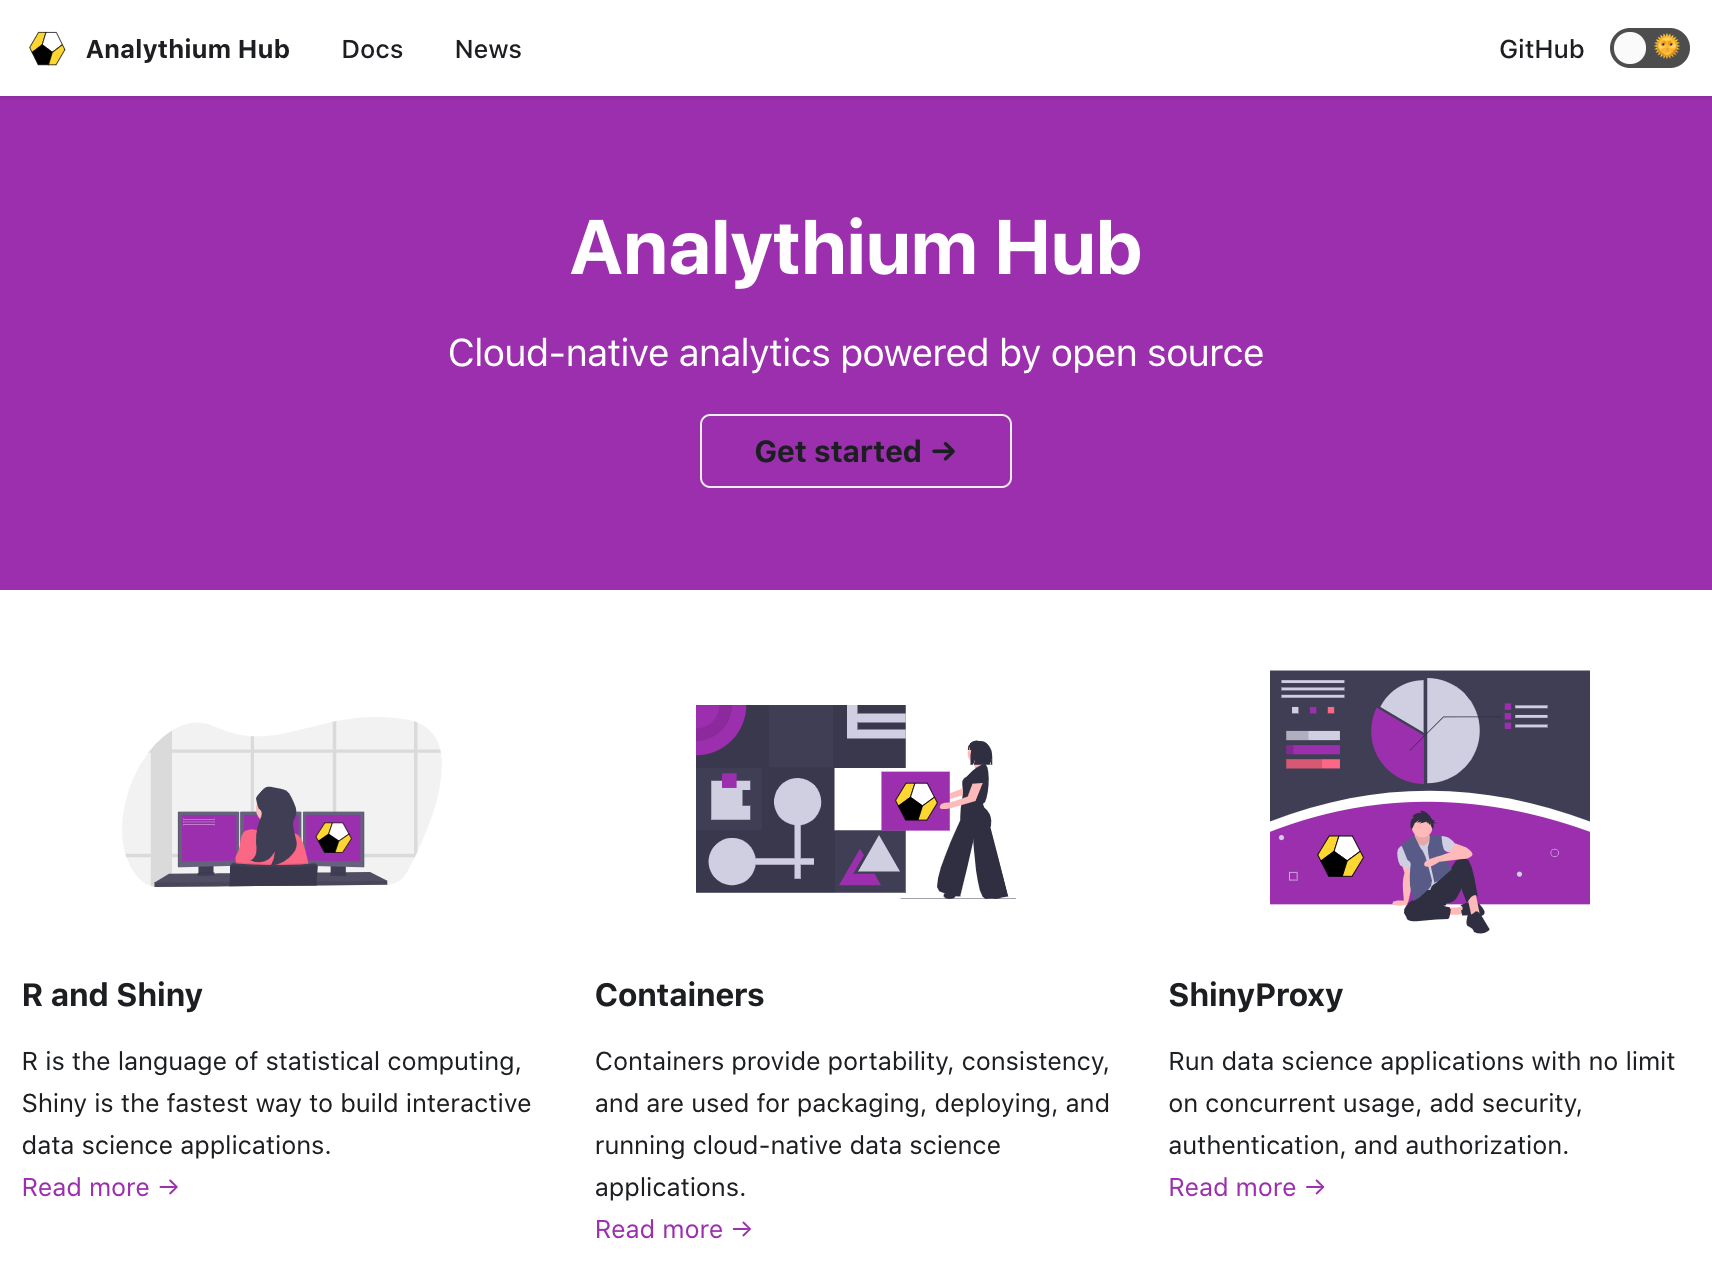 Announcing the Analythium Hub